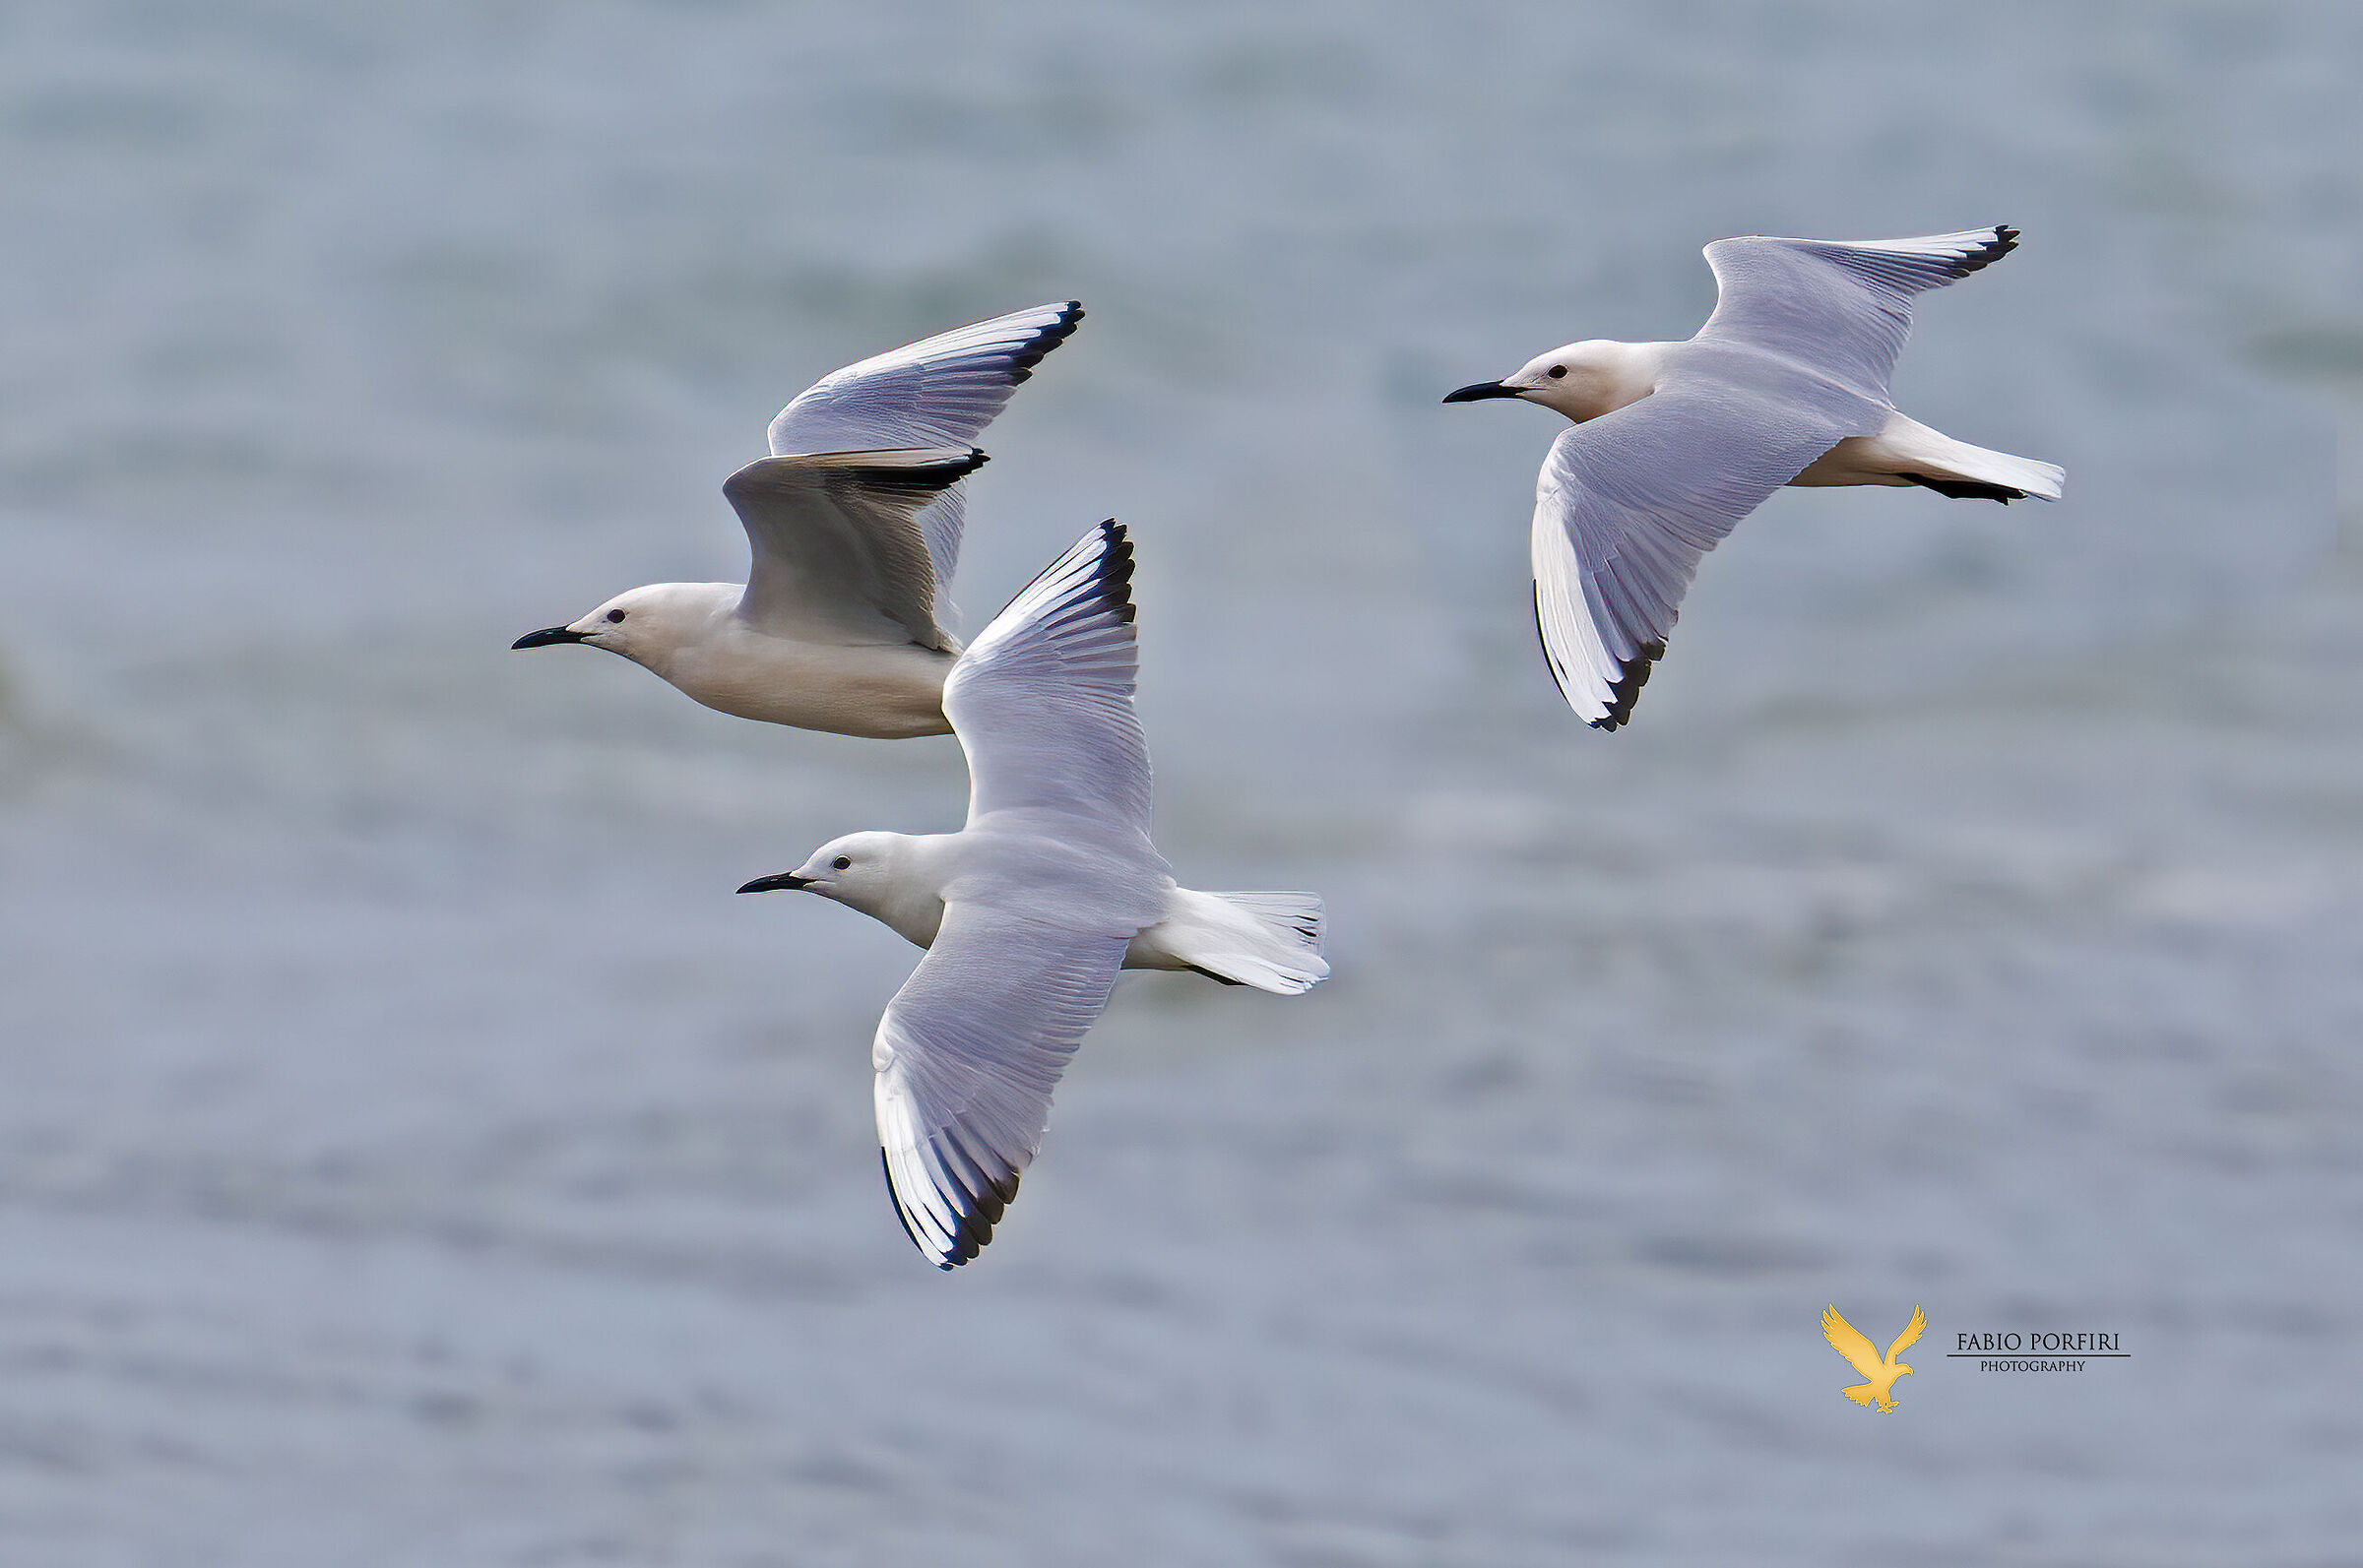 Rosy seagulls begins migration ...